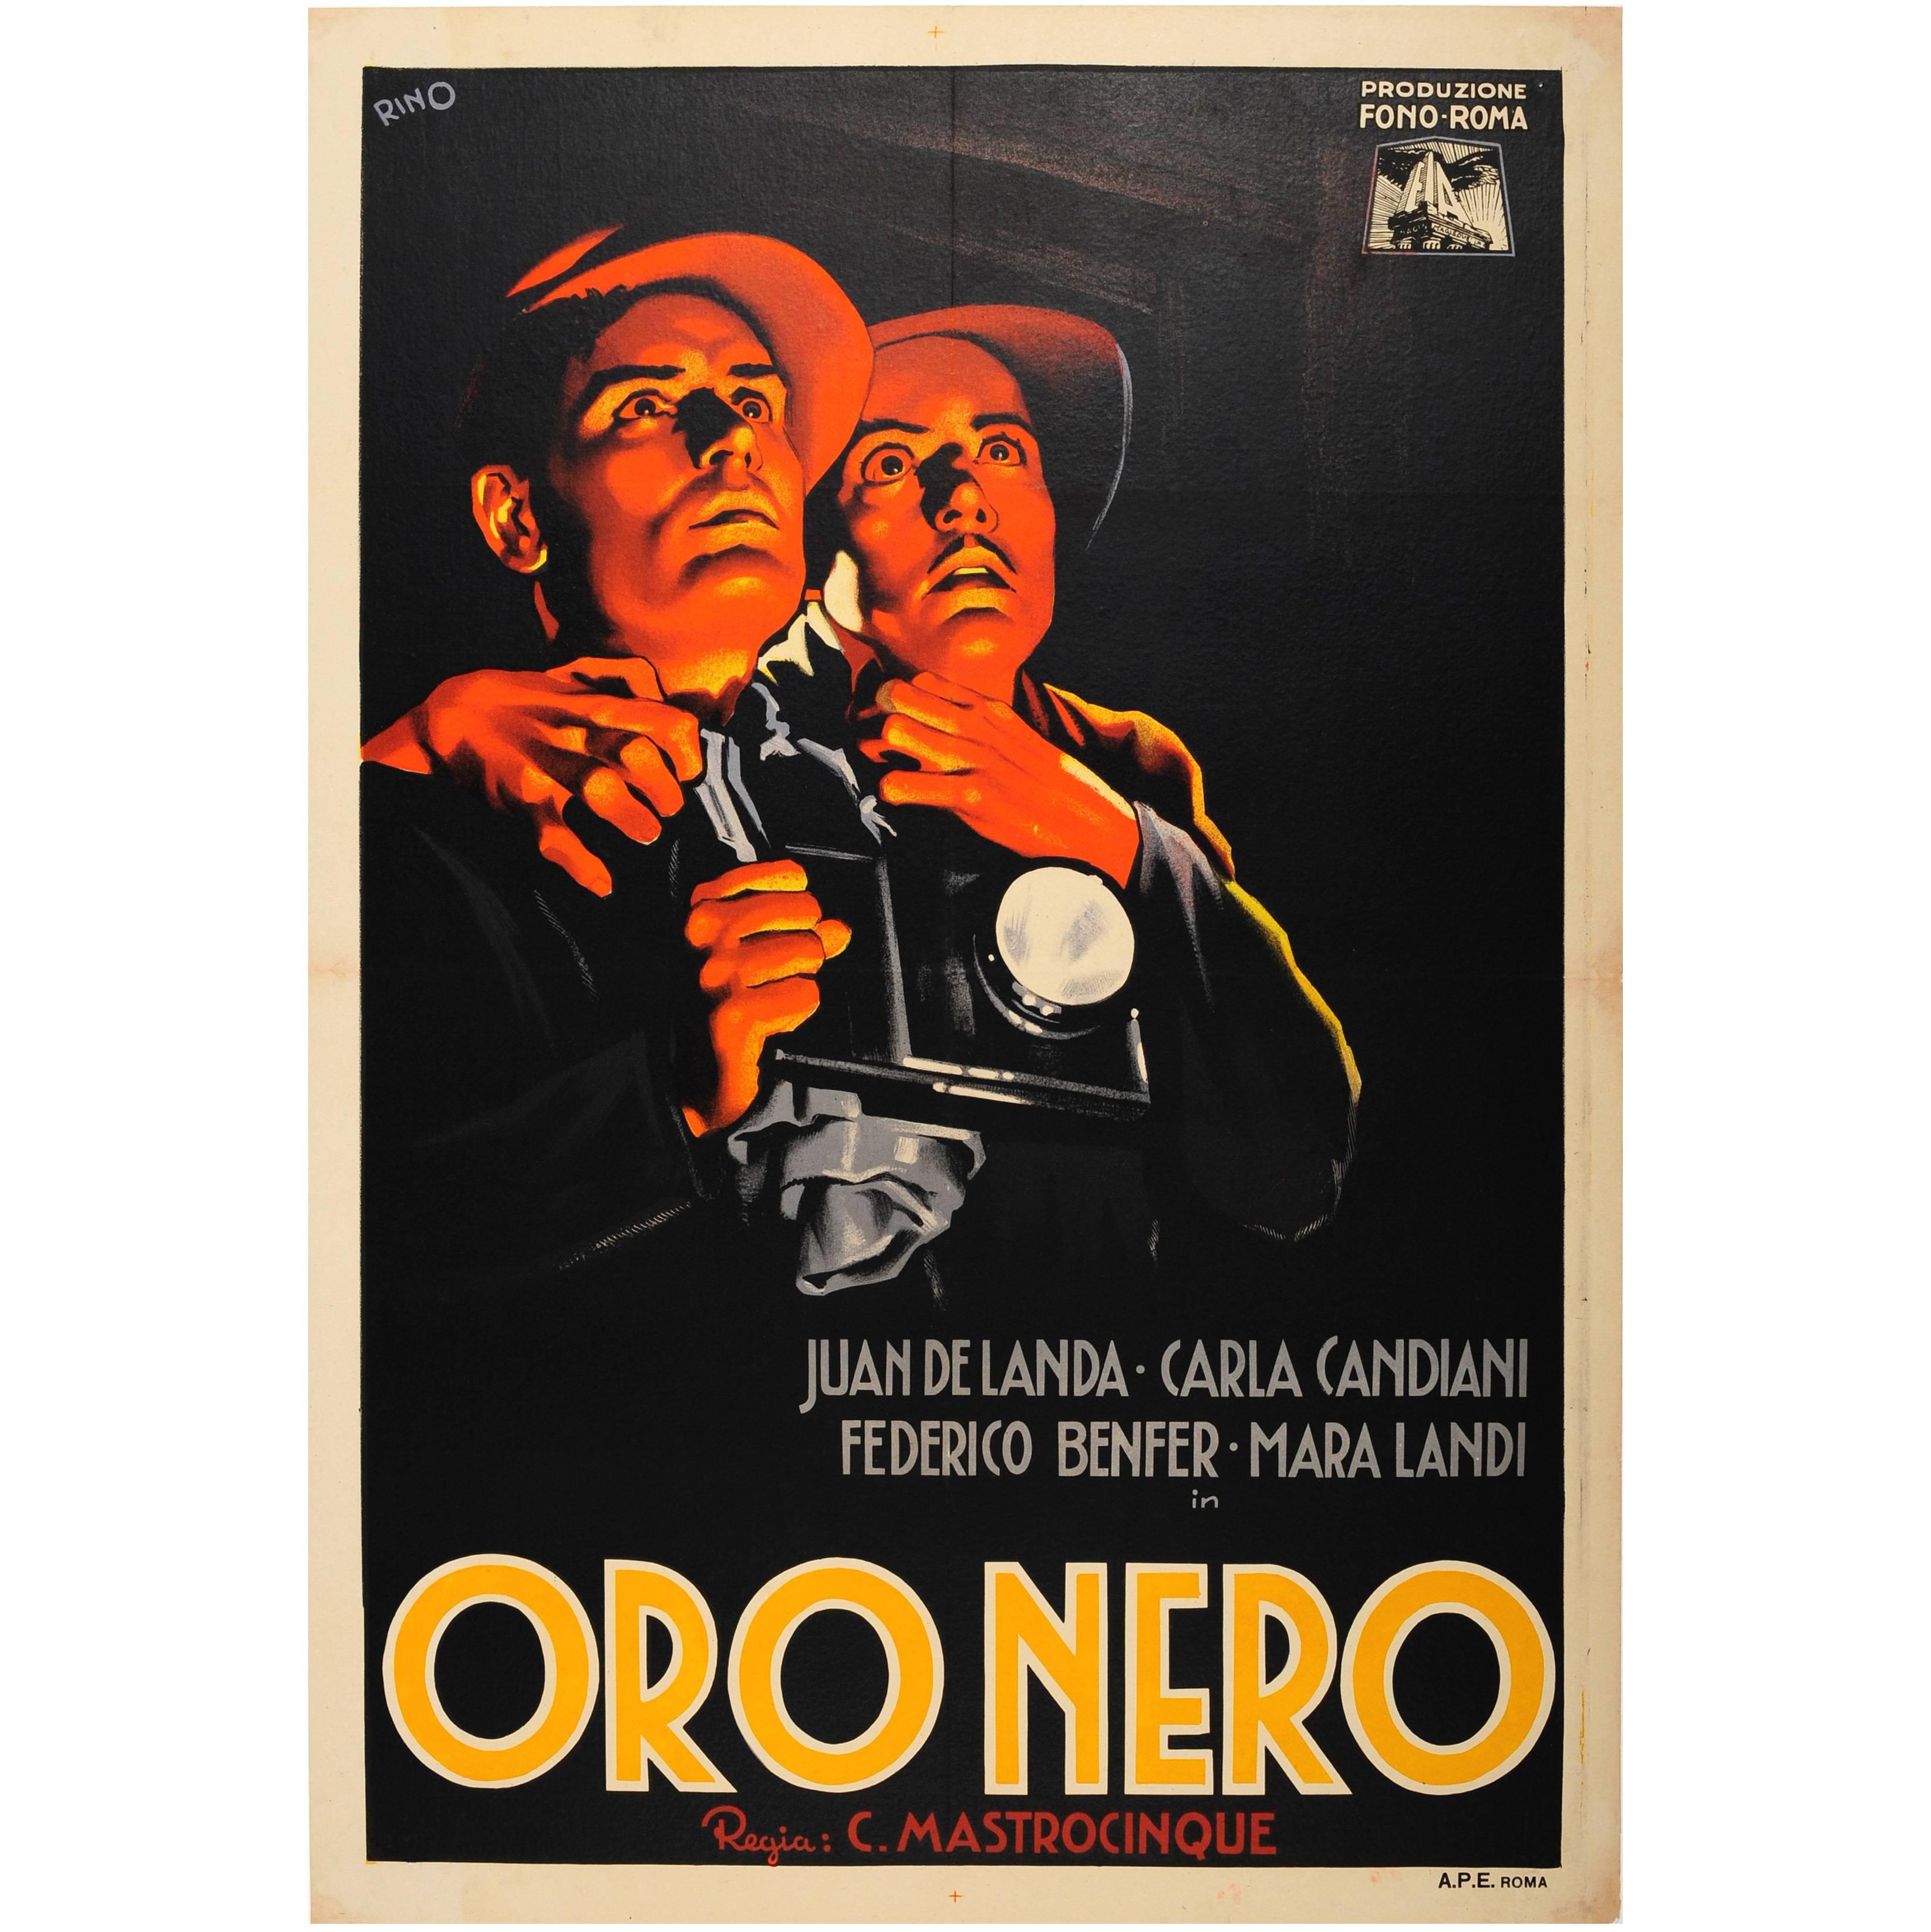 Original Vintage Movie Poster for an Italian Drama Film - Oro Nero / Black Gold